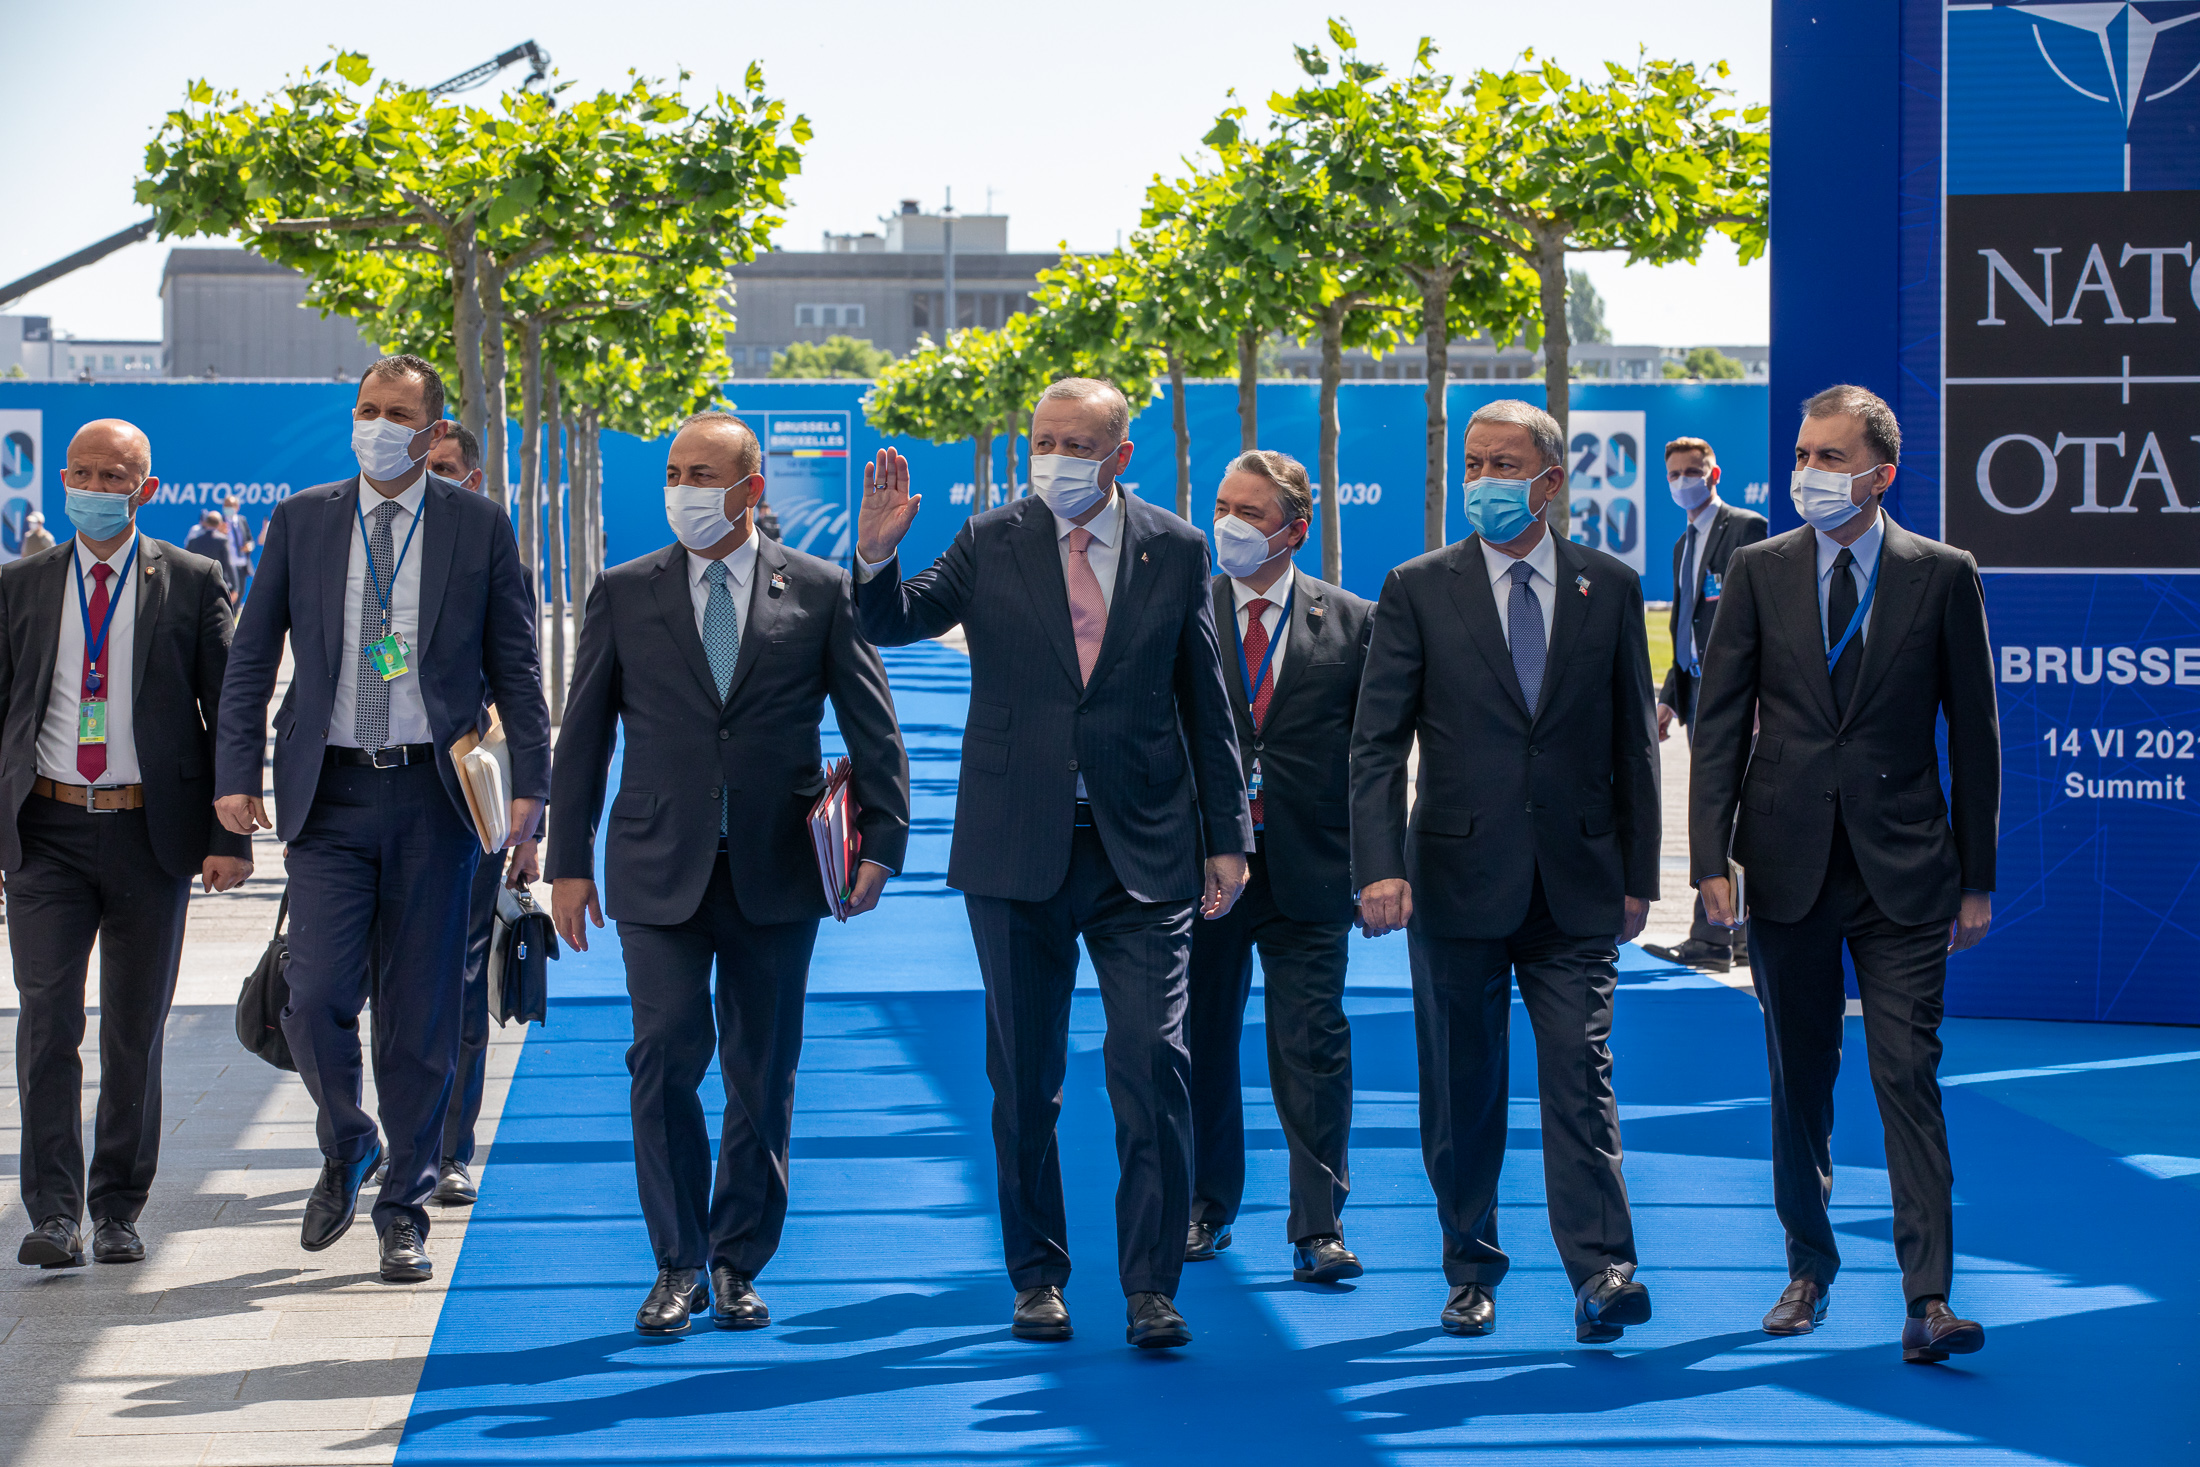 Turkish President Recep Tayyip Erdogan arriving at the NATO summit